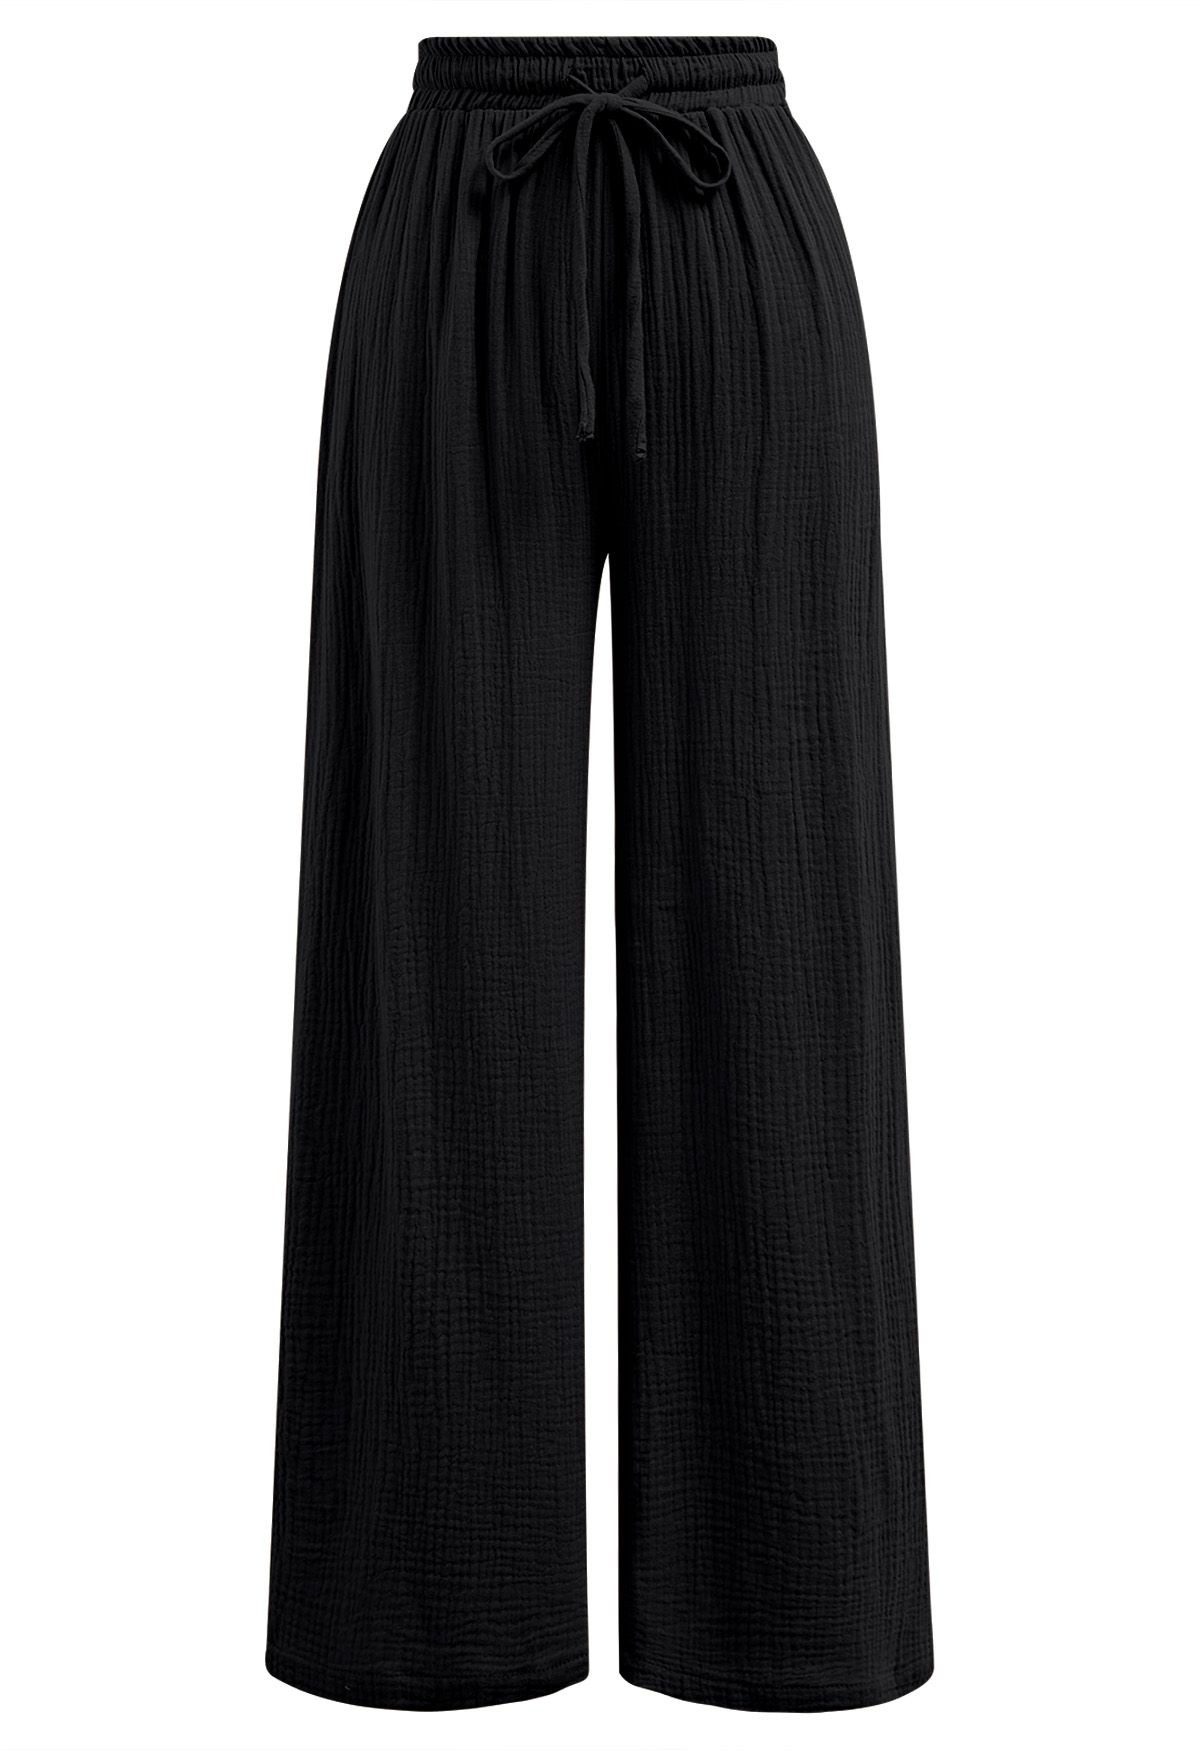 Lightweight Cotton Drawstring Pants in Black